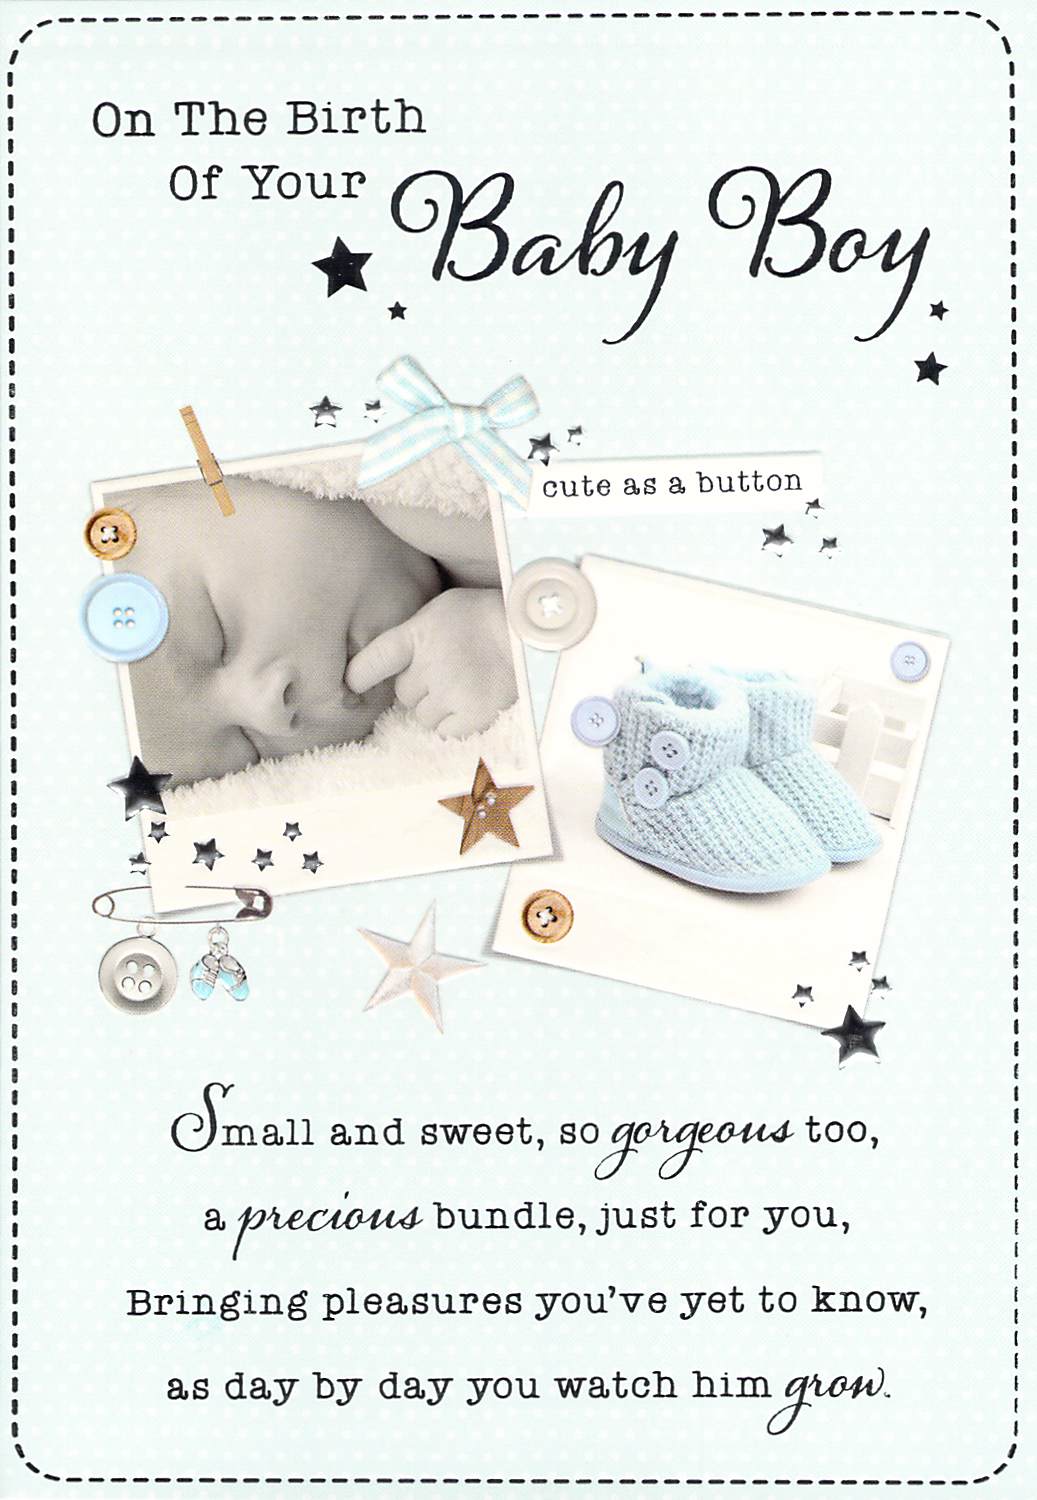 Birth (Boy) -  Greeting Card - Multi Buy Discount - Free P&P